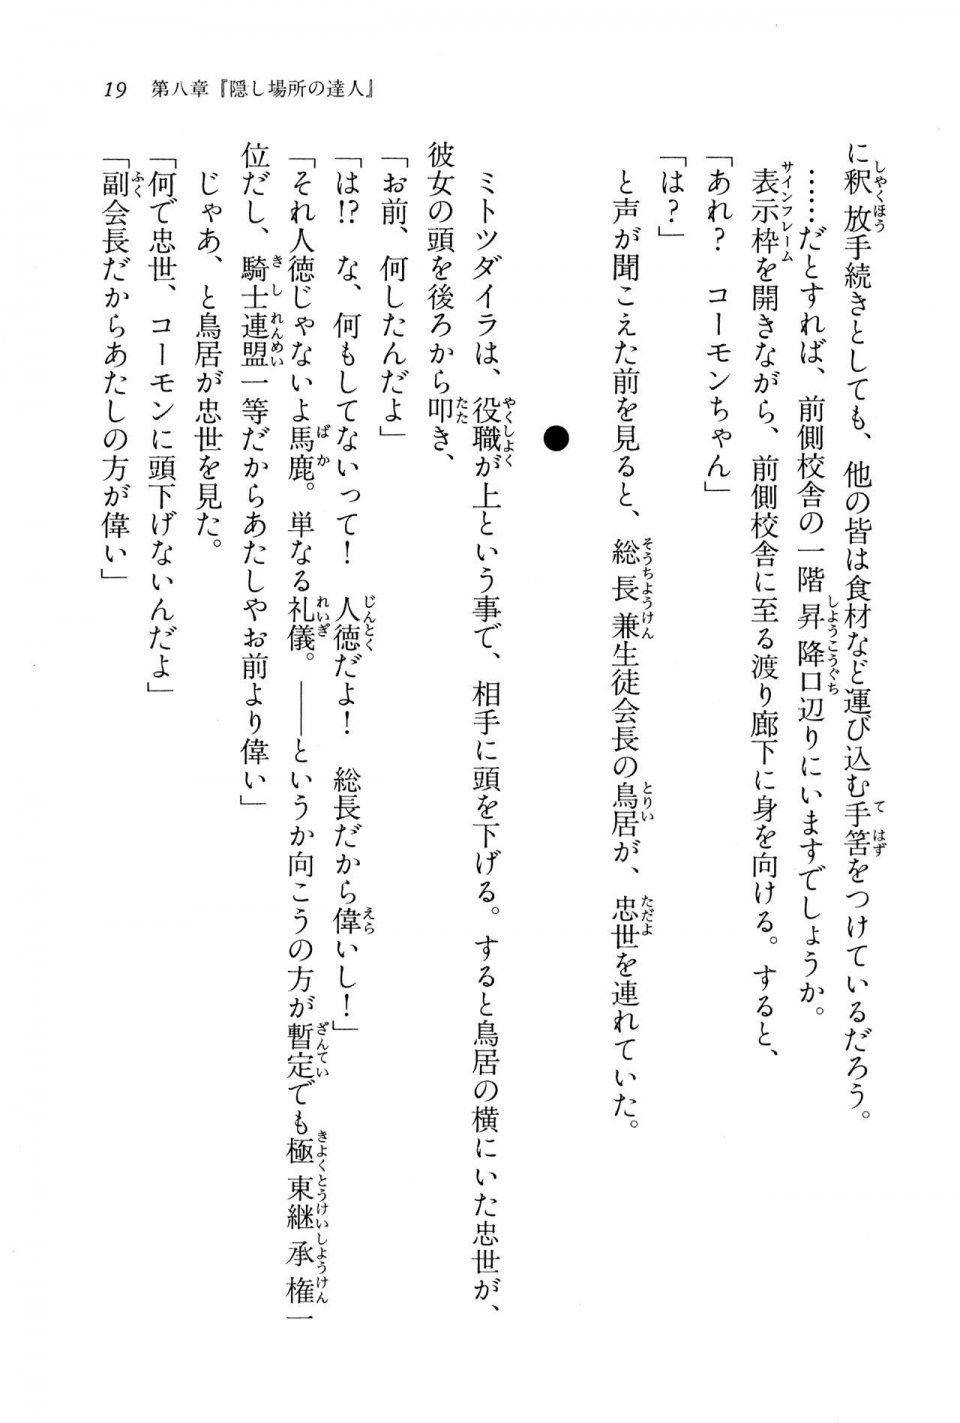 Kyoukai Senjou no Horizon BD Special Mininovel Vol 8(4B) - Photo #23